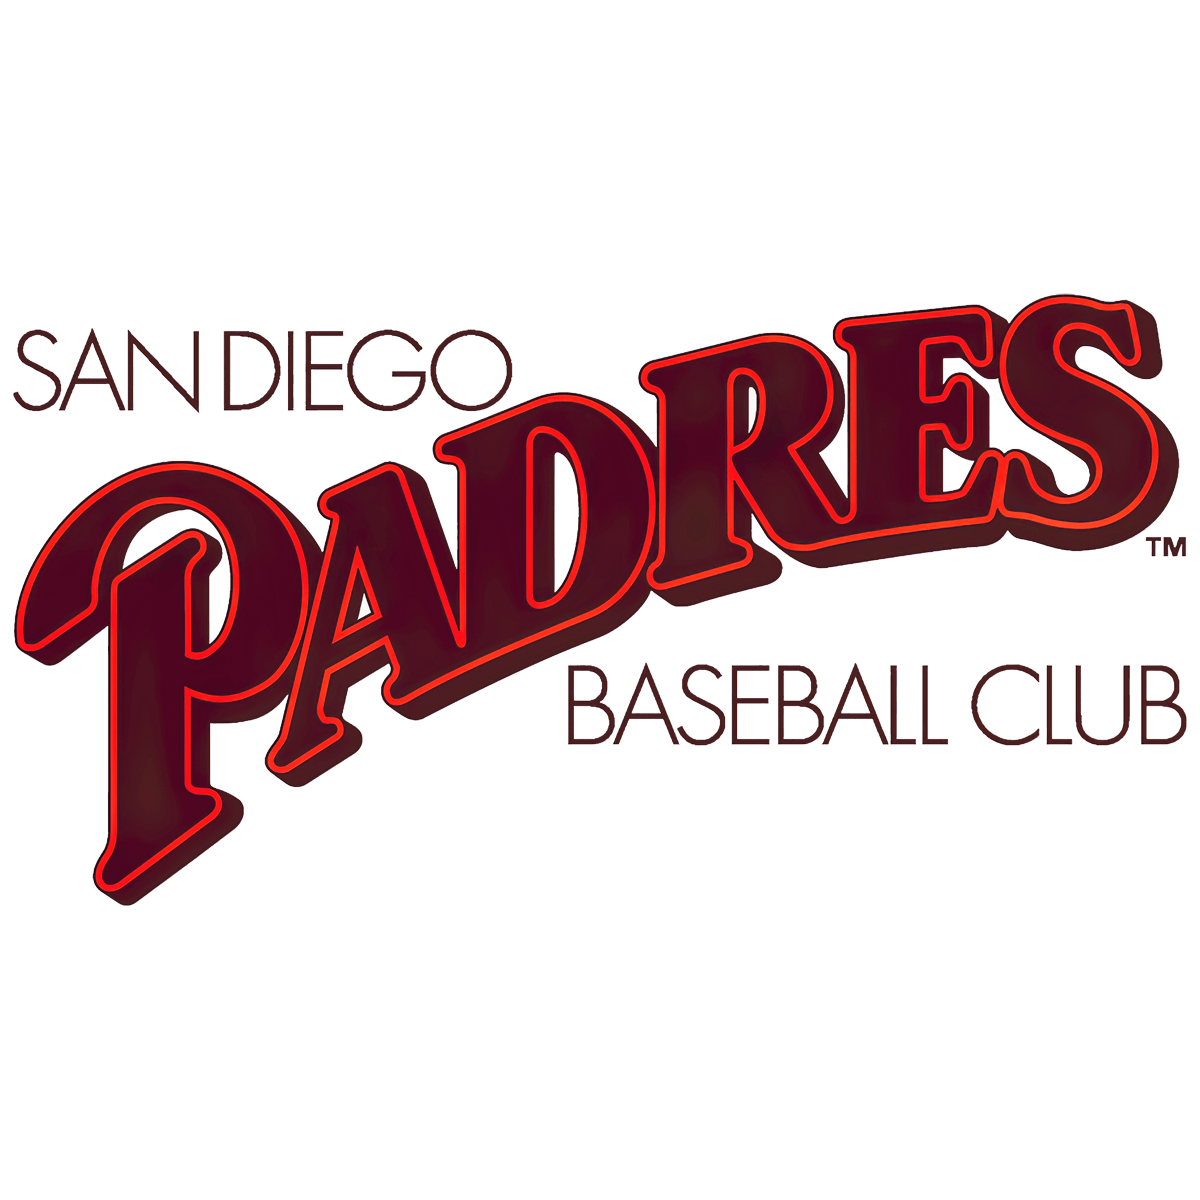 San Diego Padres logo 1985